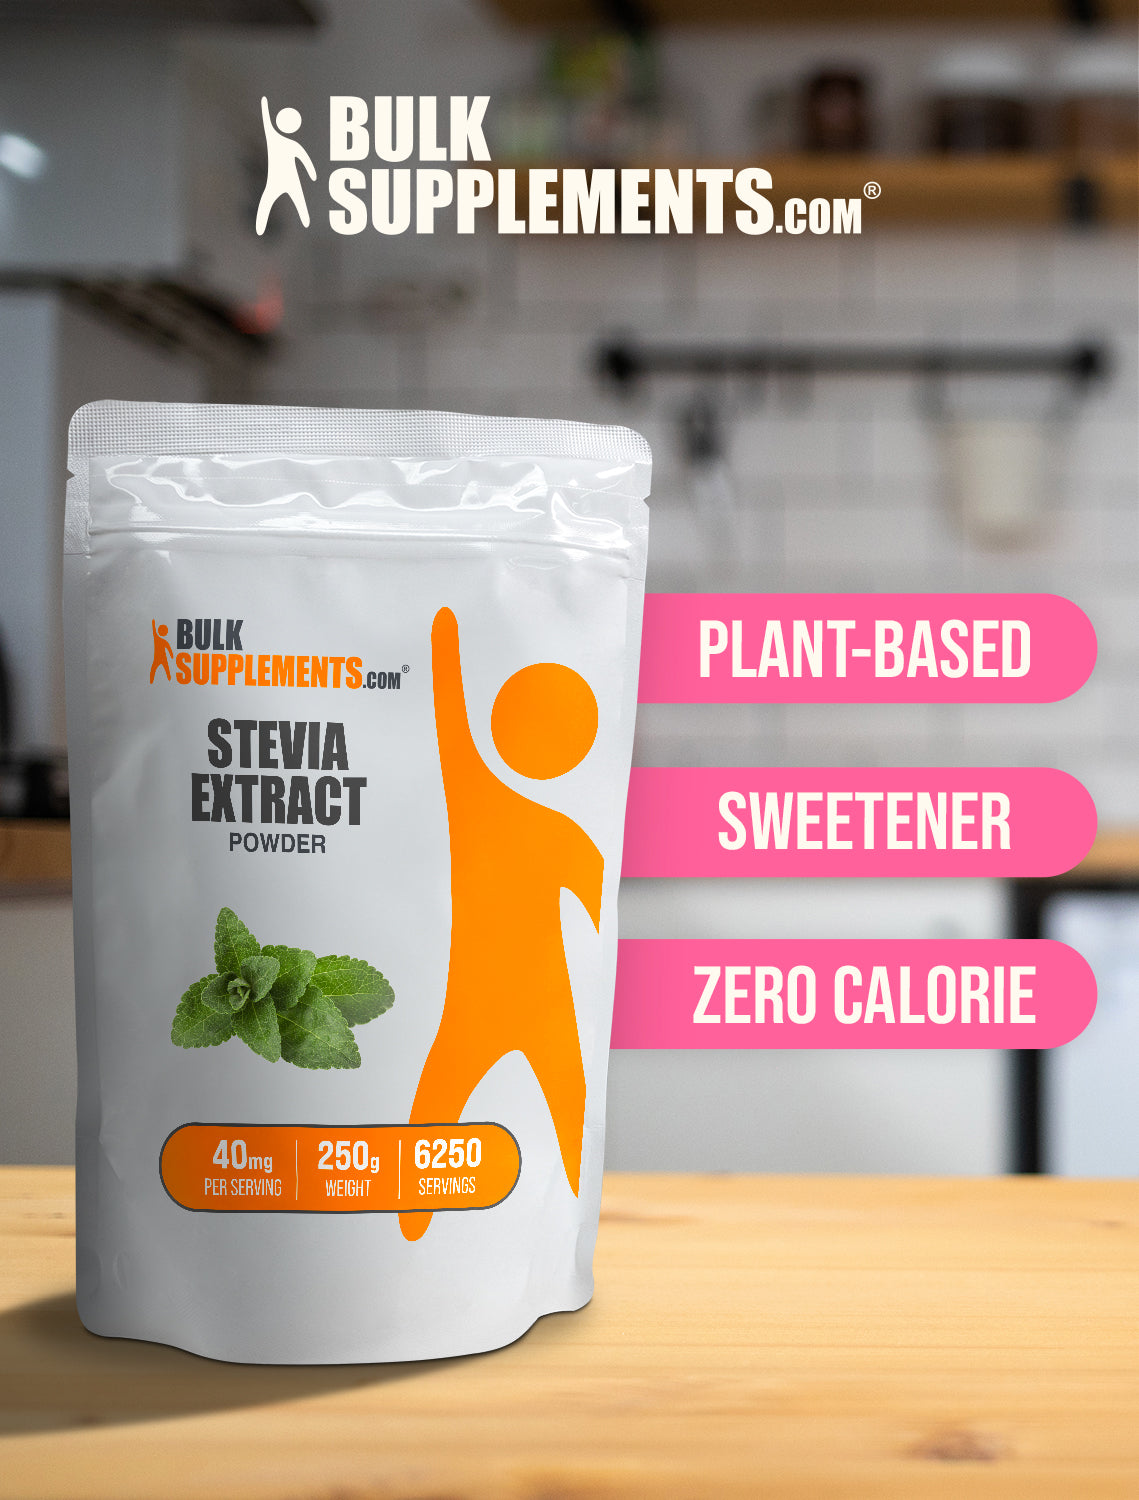 Stevia extract powder keyword image 250g